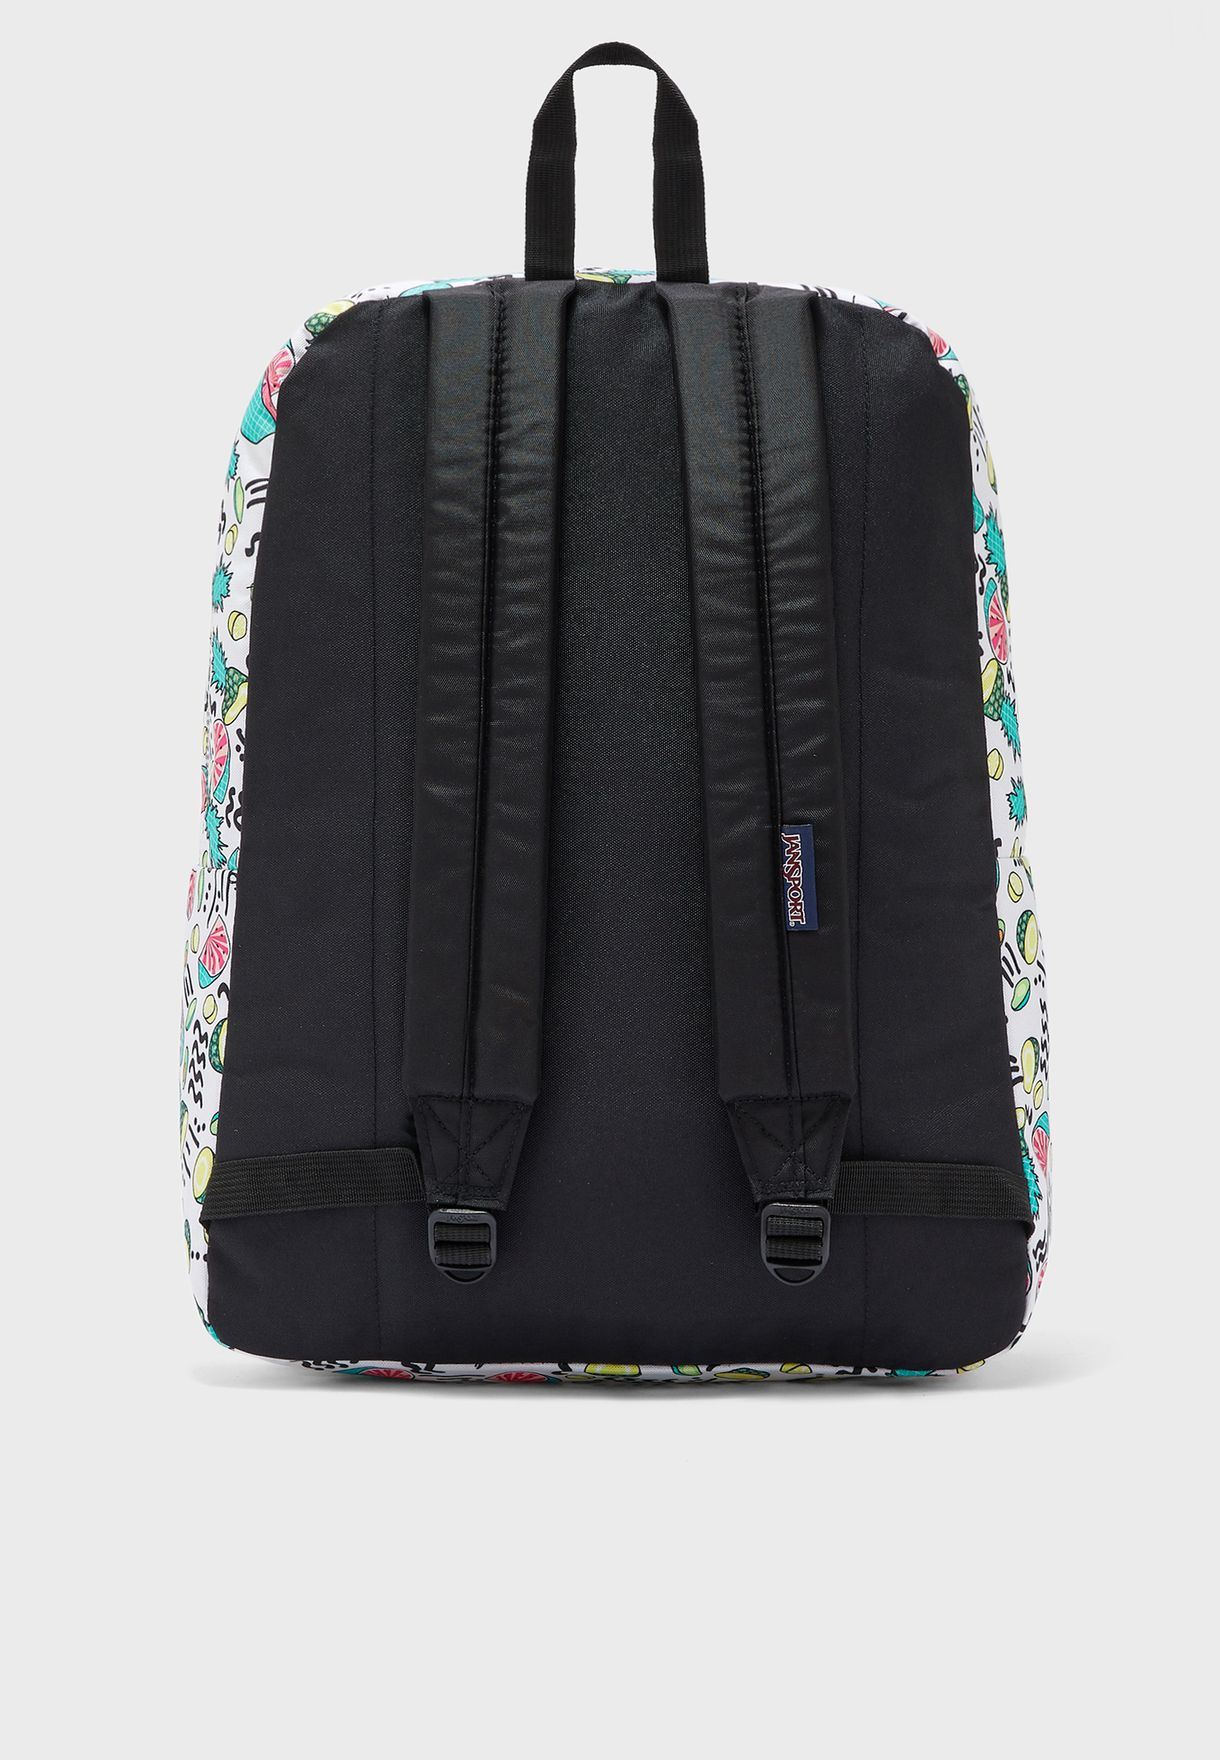 jansport fruit ninja backpack